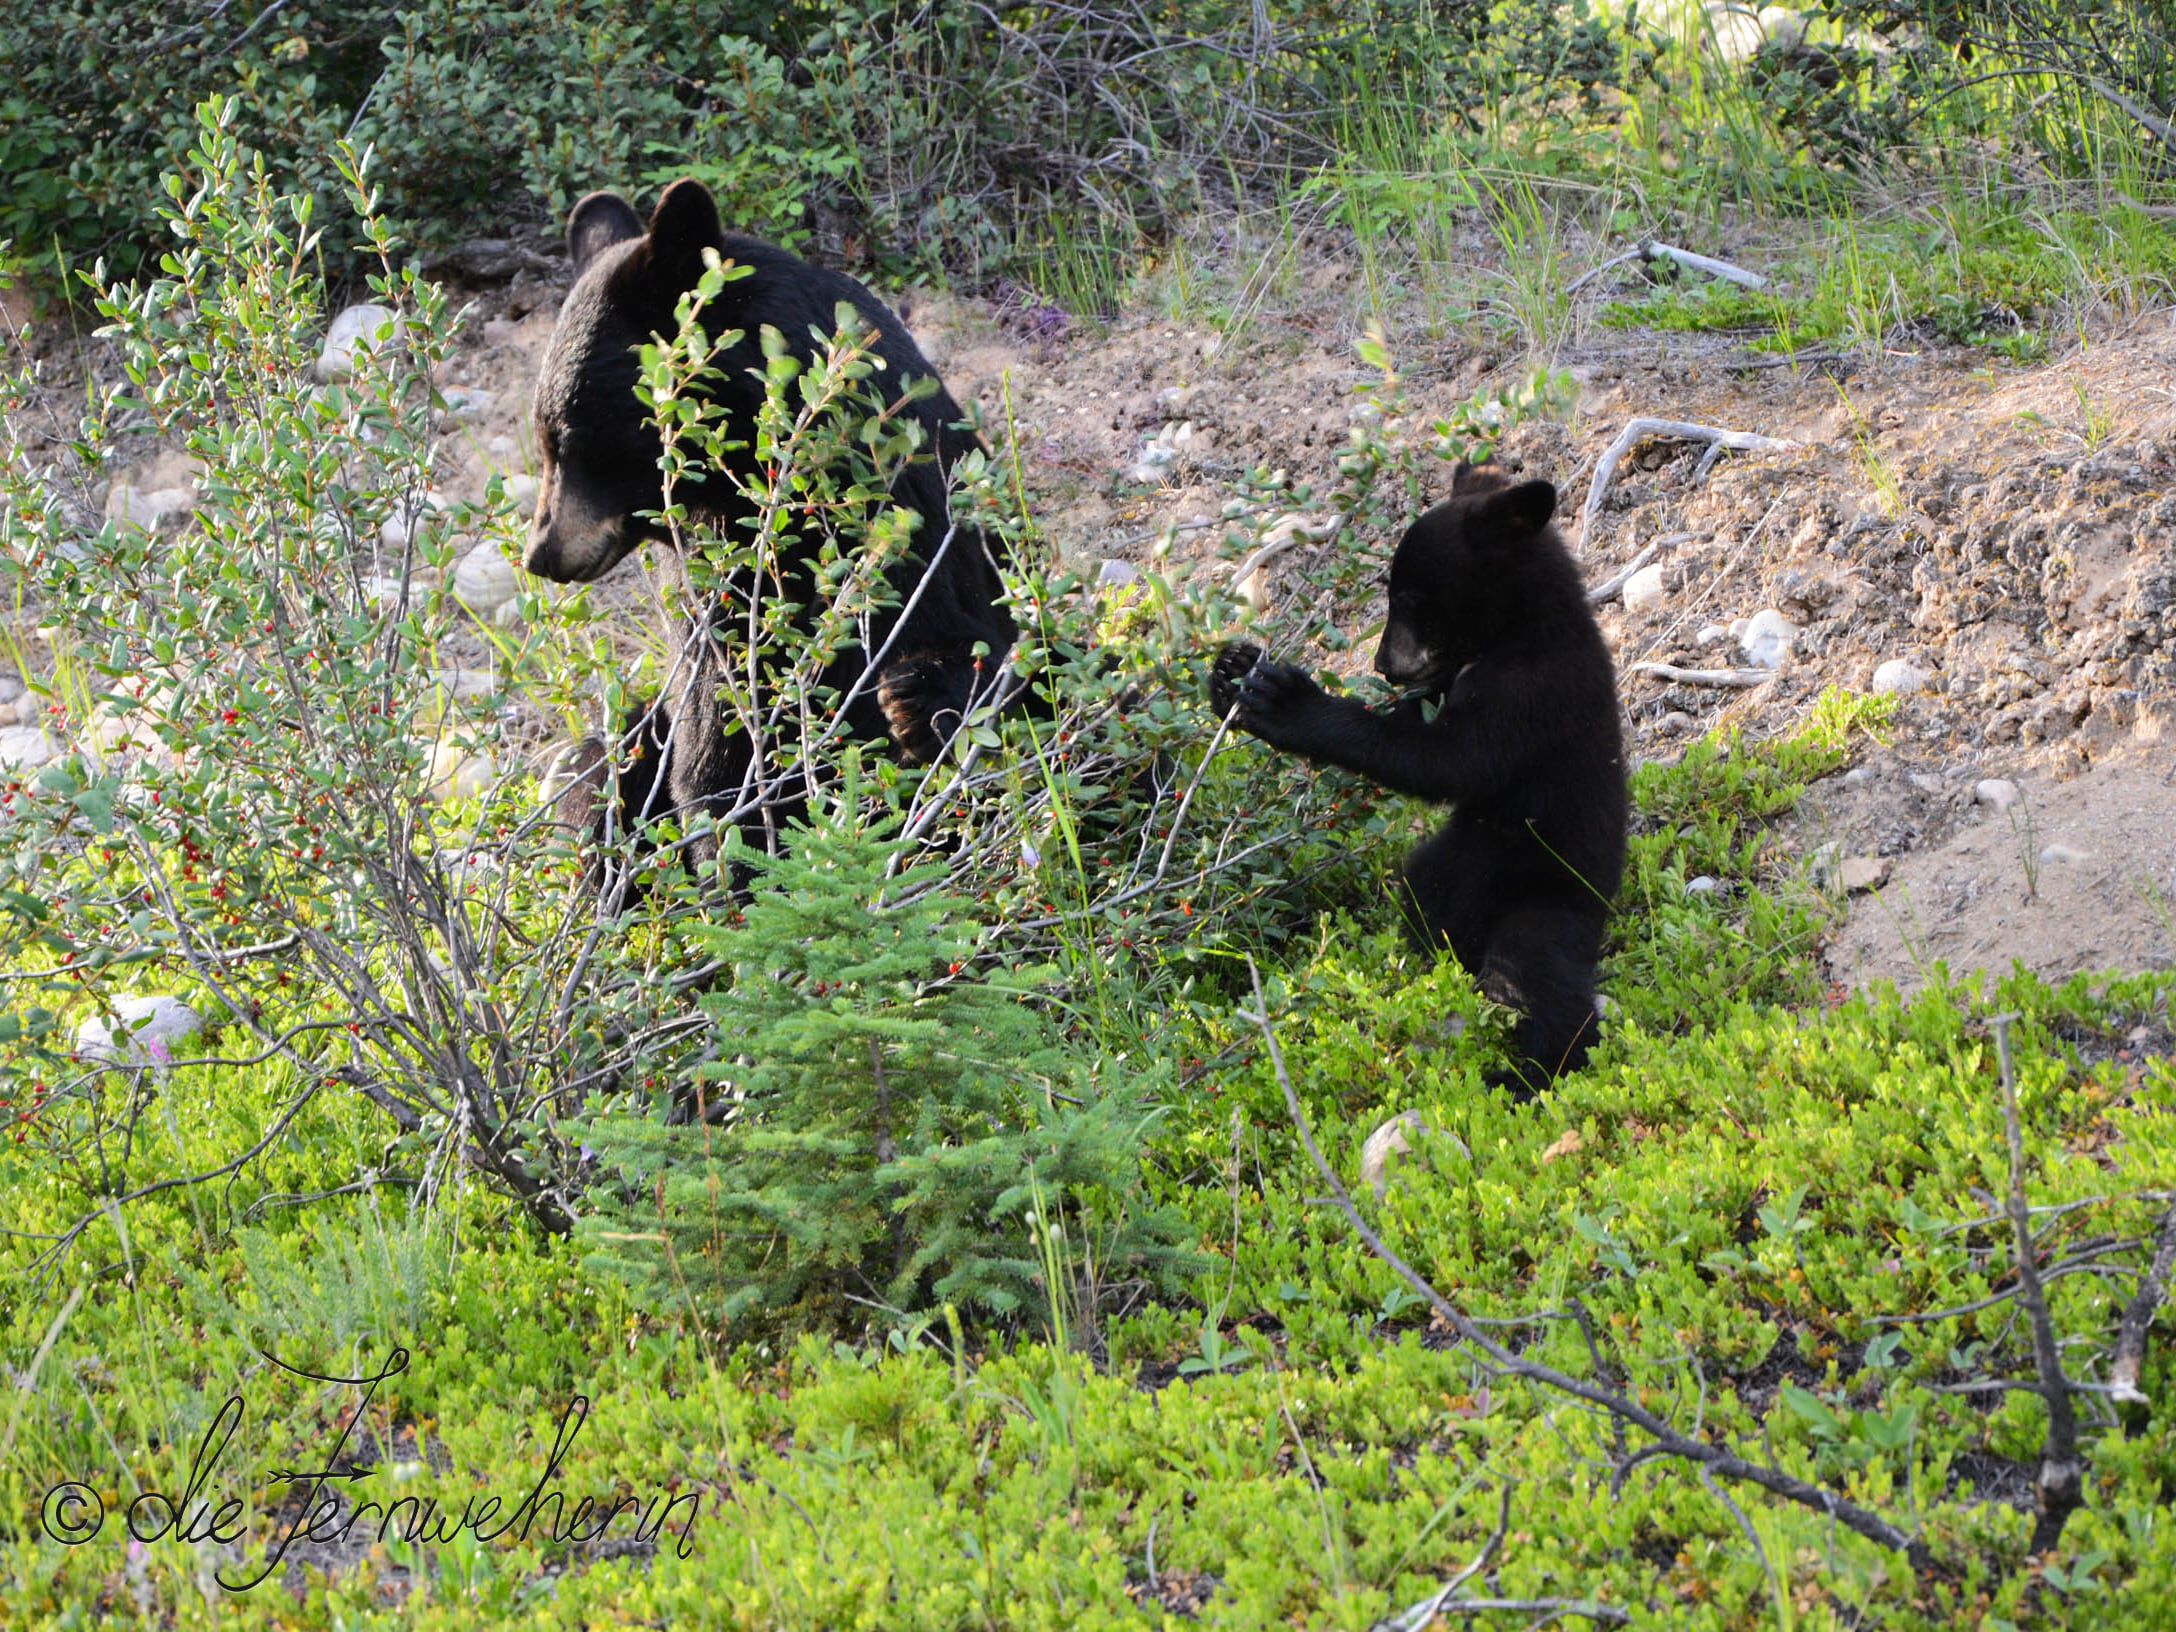 A female black bear teaches her cub how to strip berries from a bush.